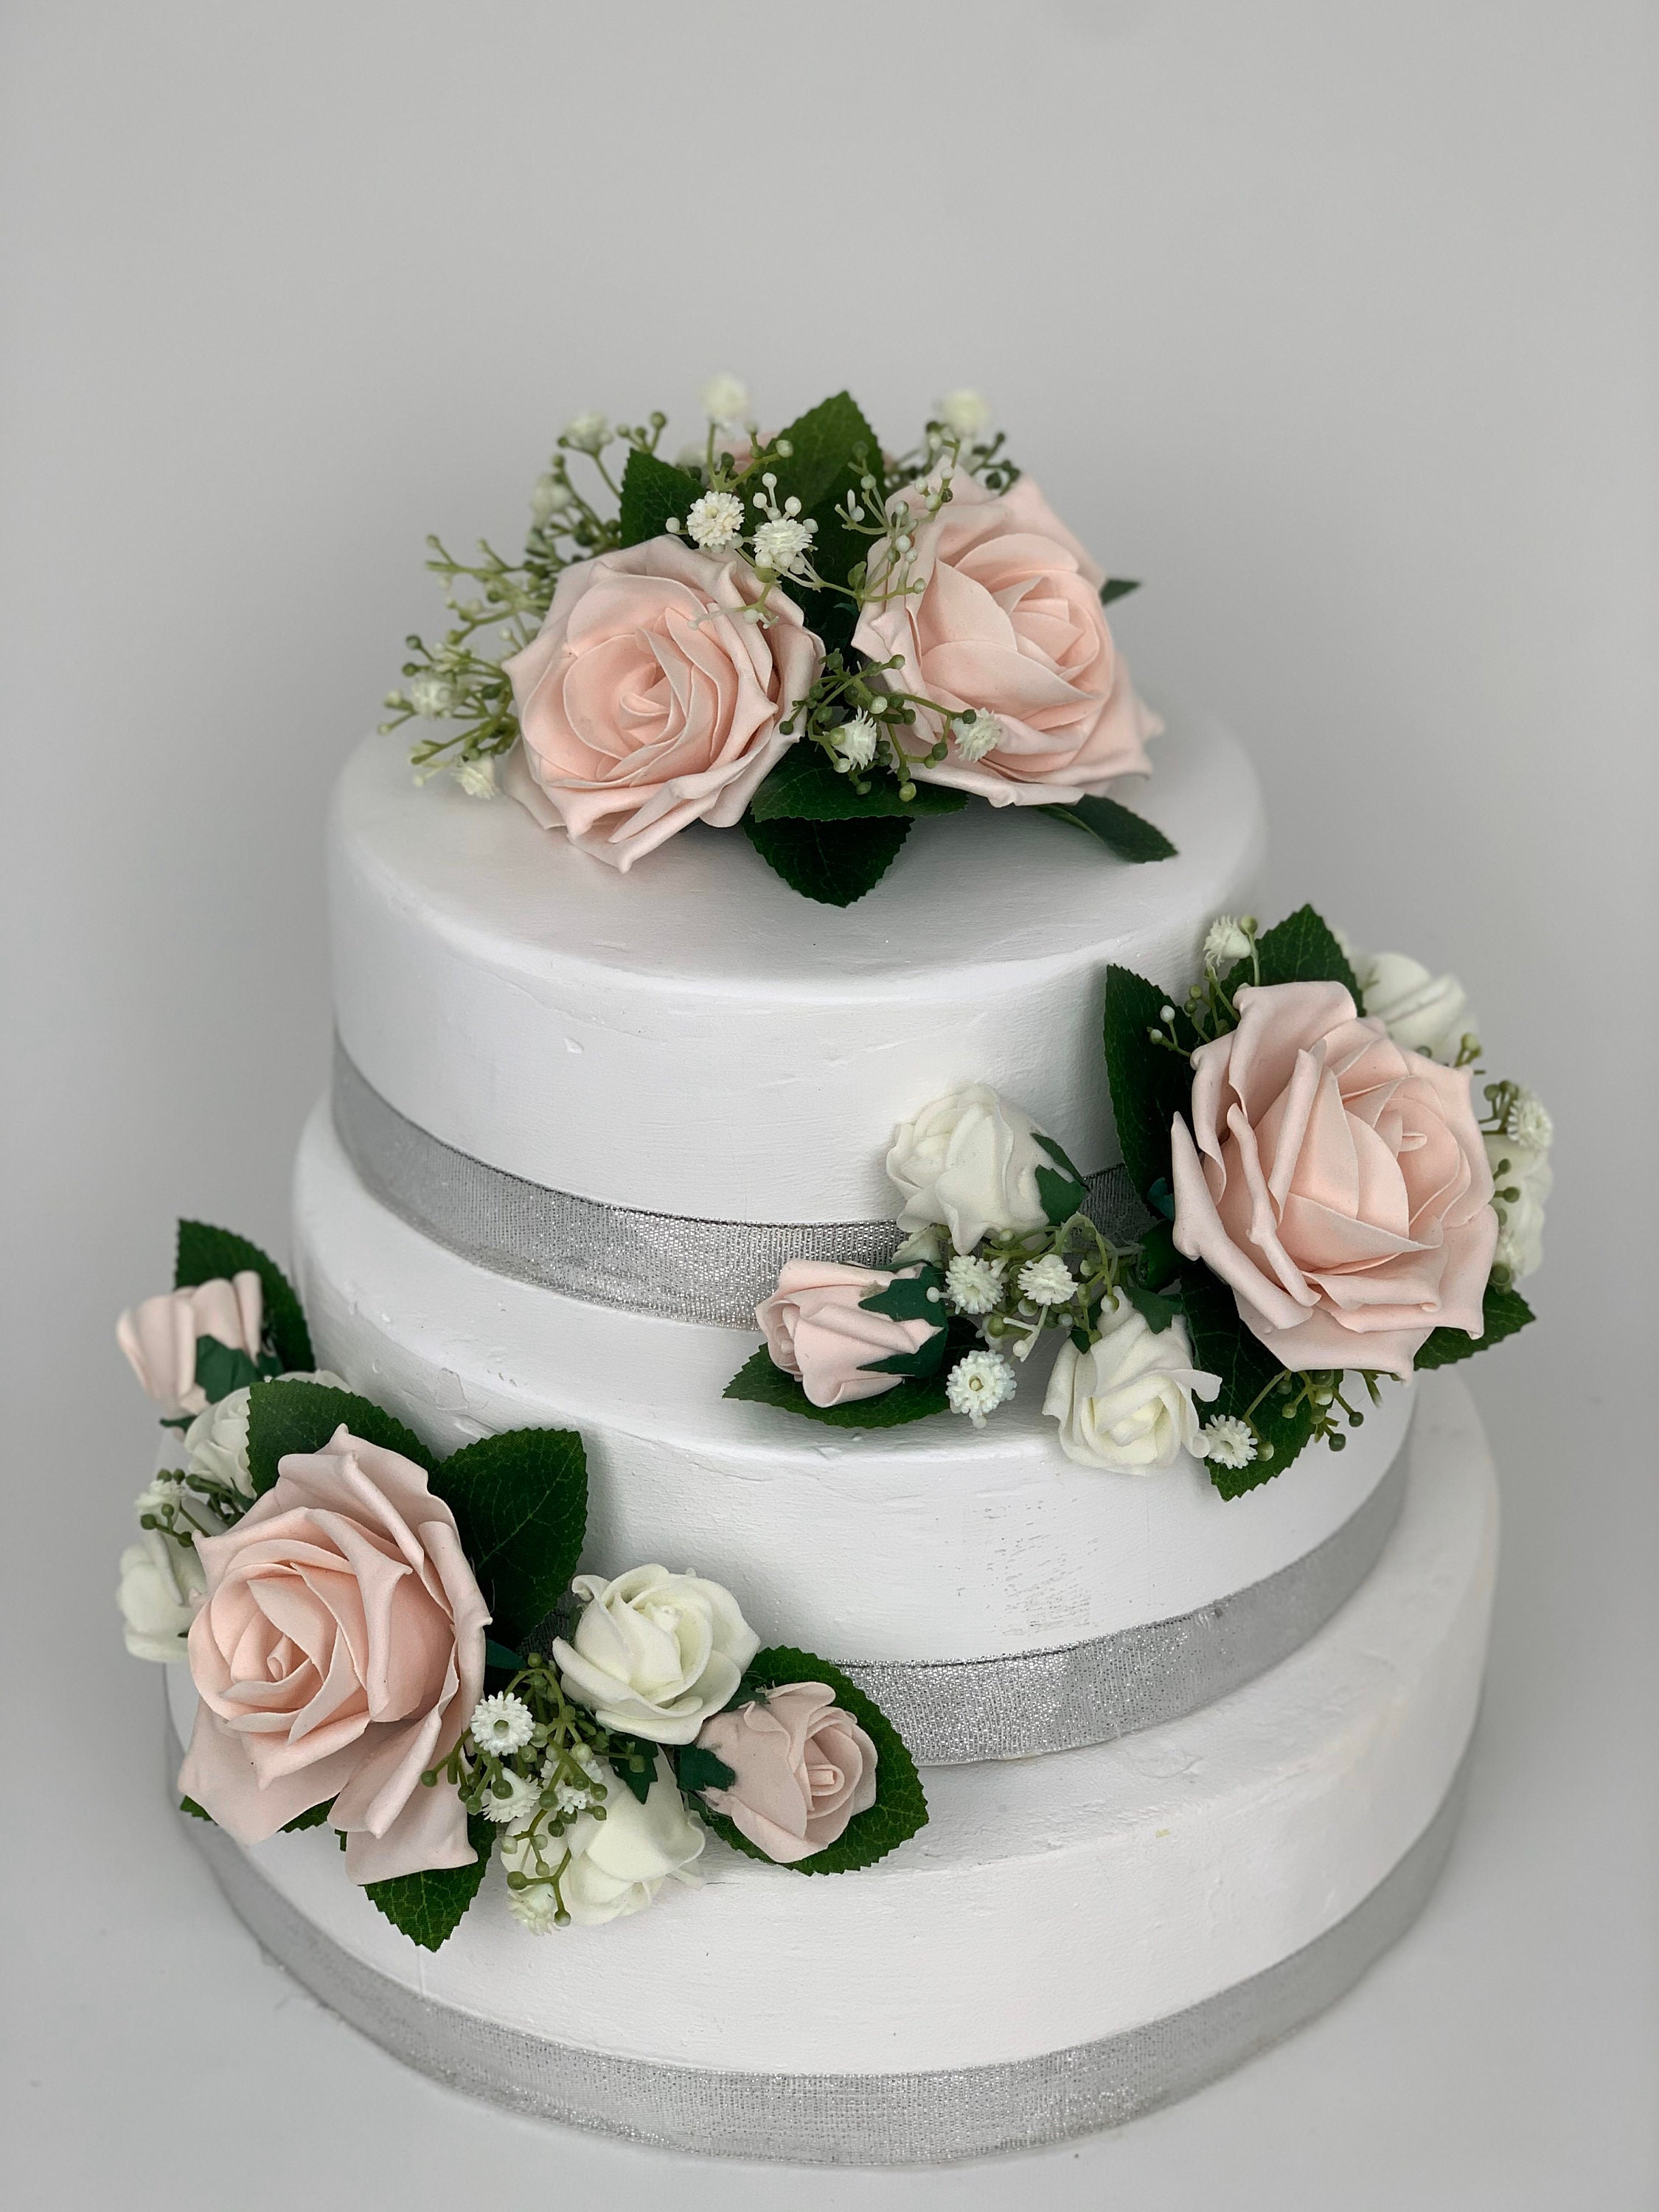 6 Pcs ROSES Wafer Paper, Edible Flowers, Cake Topper, Wedding Cake